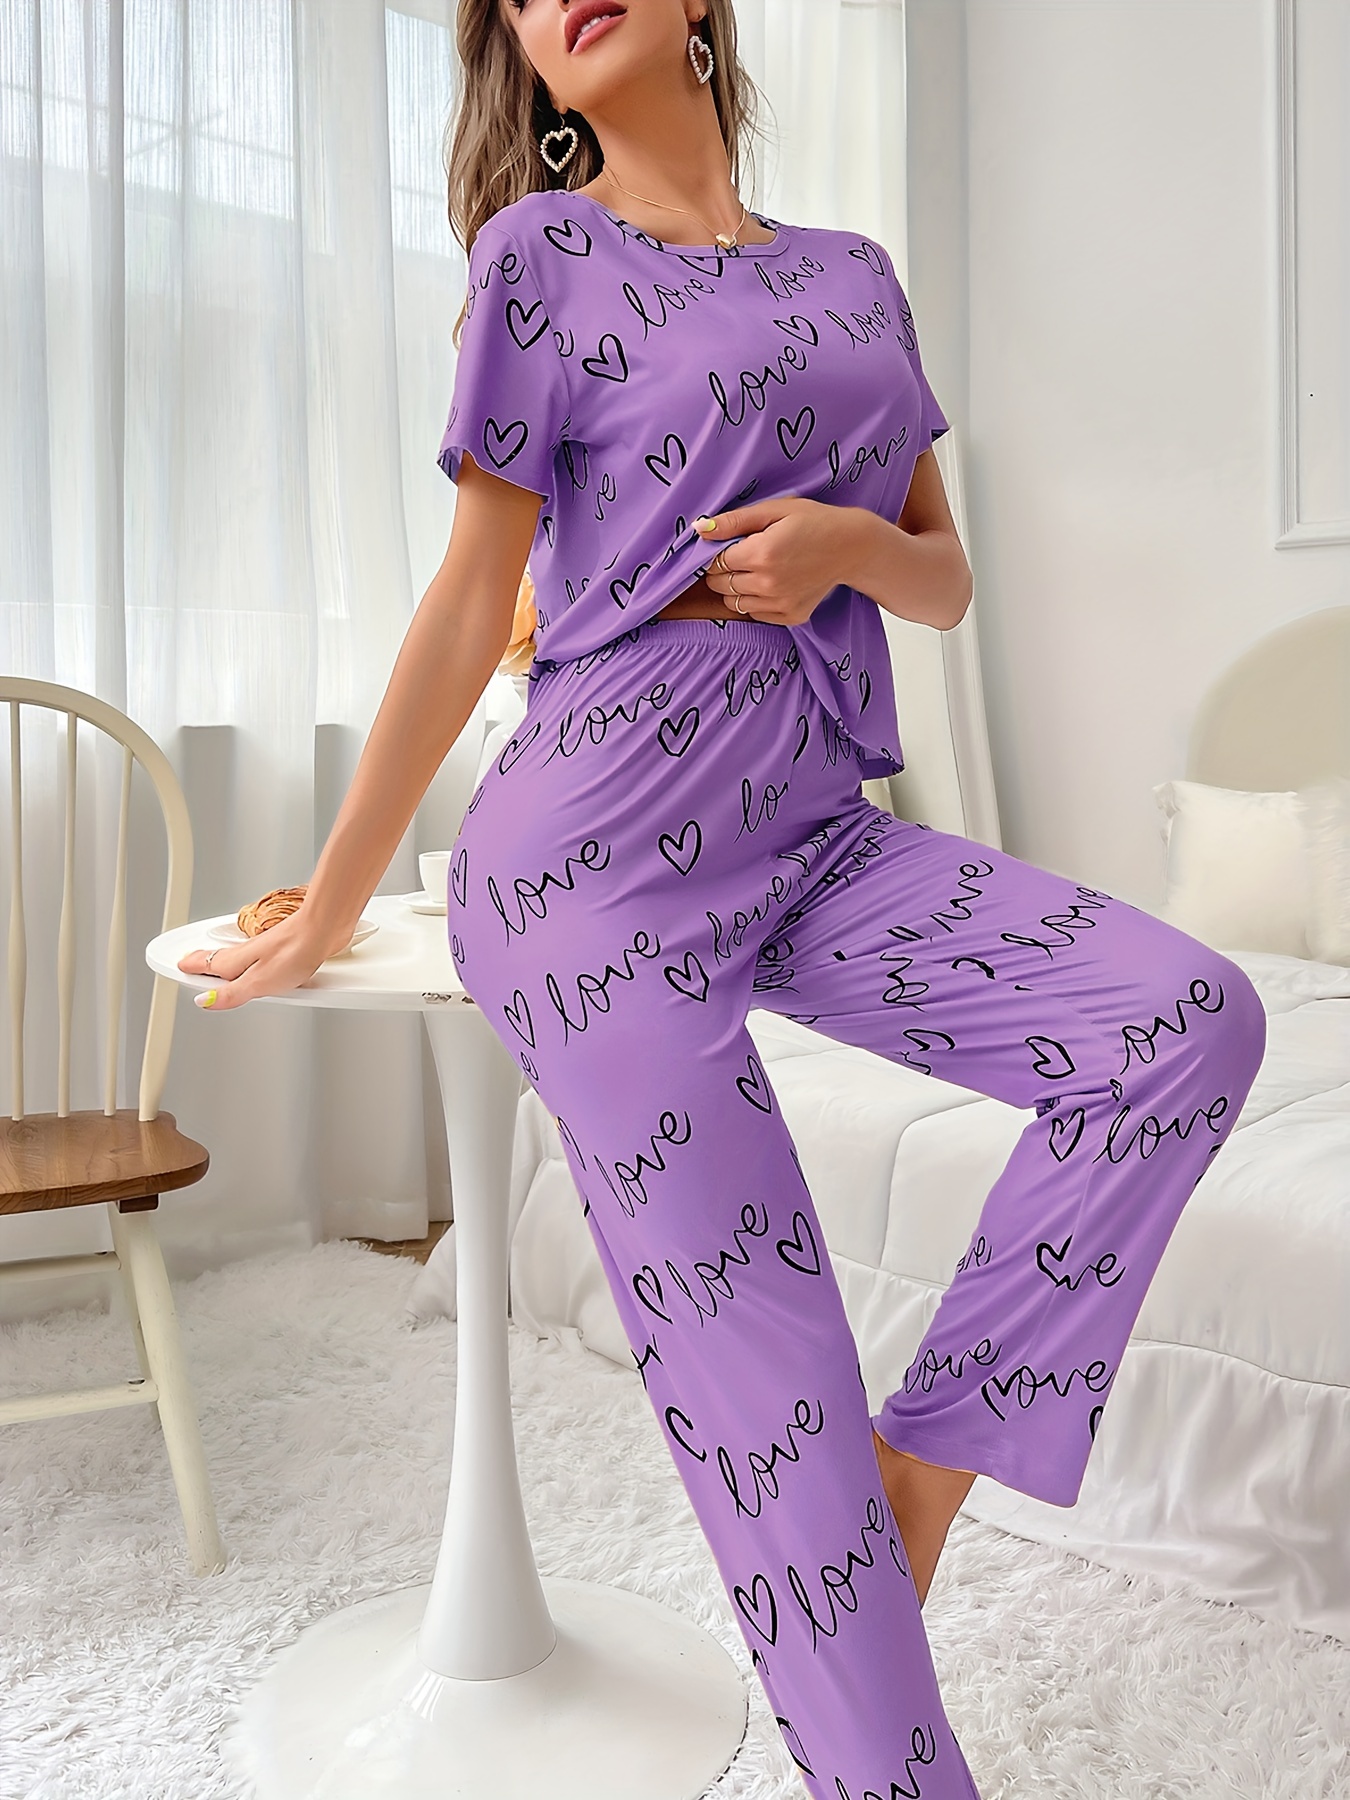 Cozyease Women's Cute Pajama Set Heart Print Short Sleeve Round